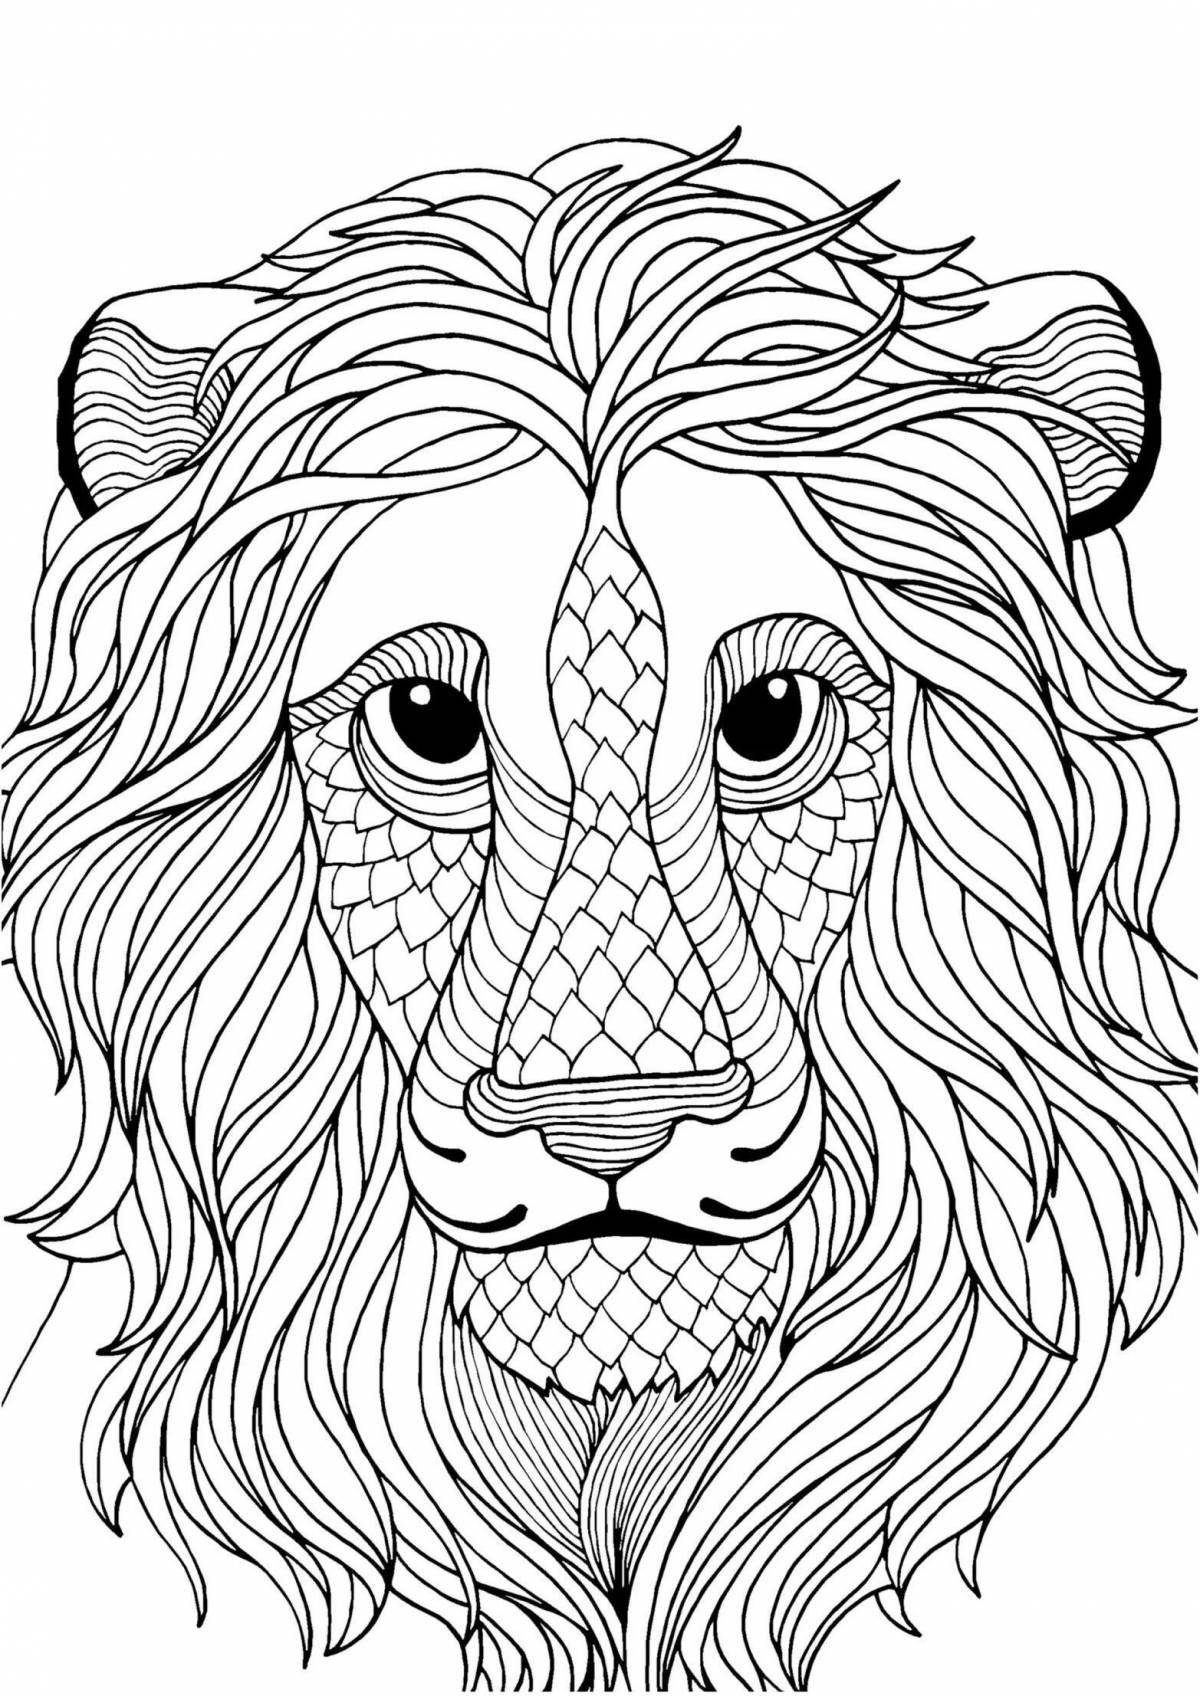 Coloring book shining lion head